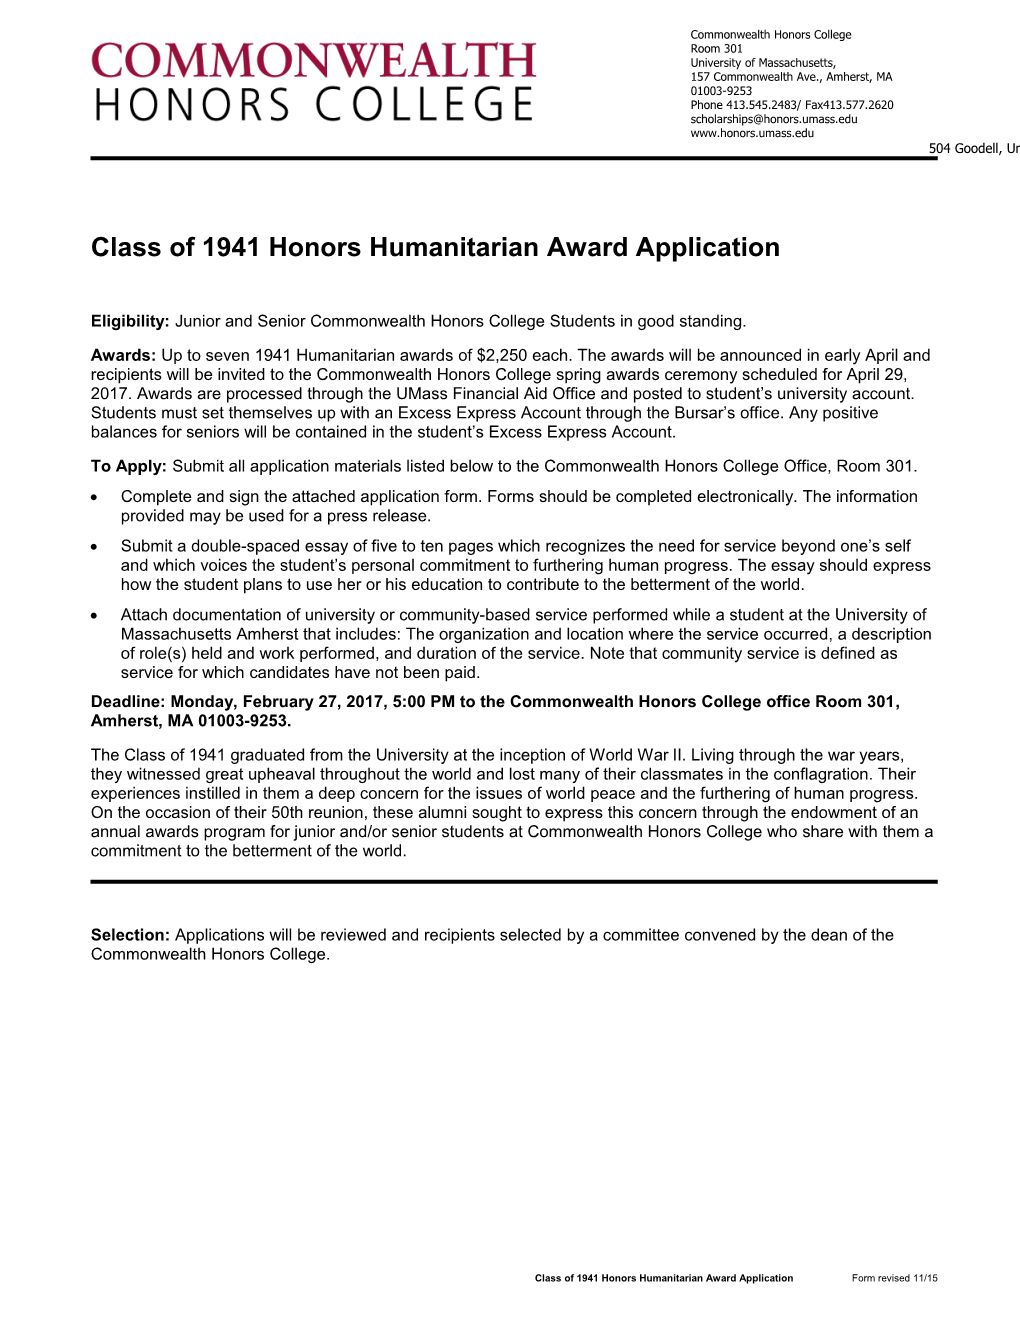 Class of 1941 Honors Humanitarian Award Application